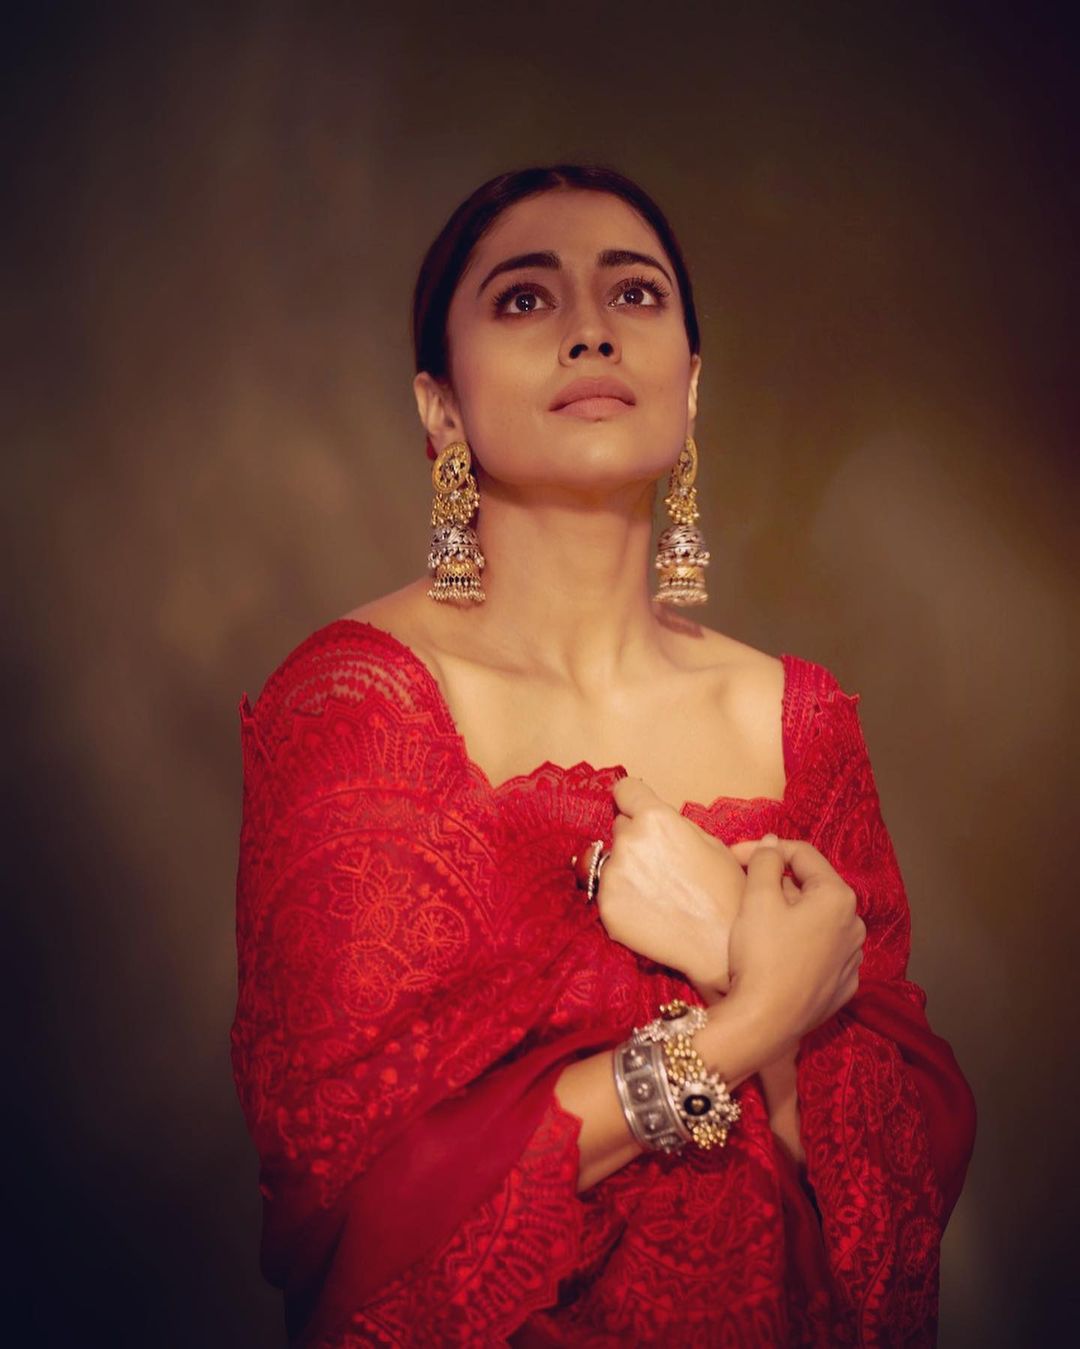 The Dishryam 2 actress Shriya Saran exudes elegance in a red saree